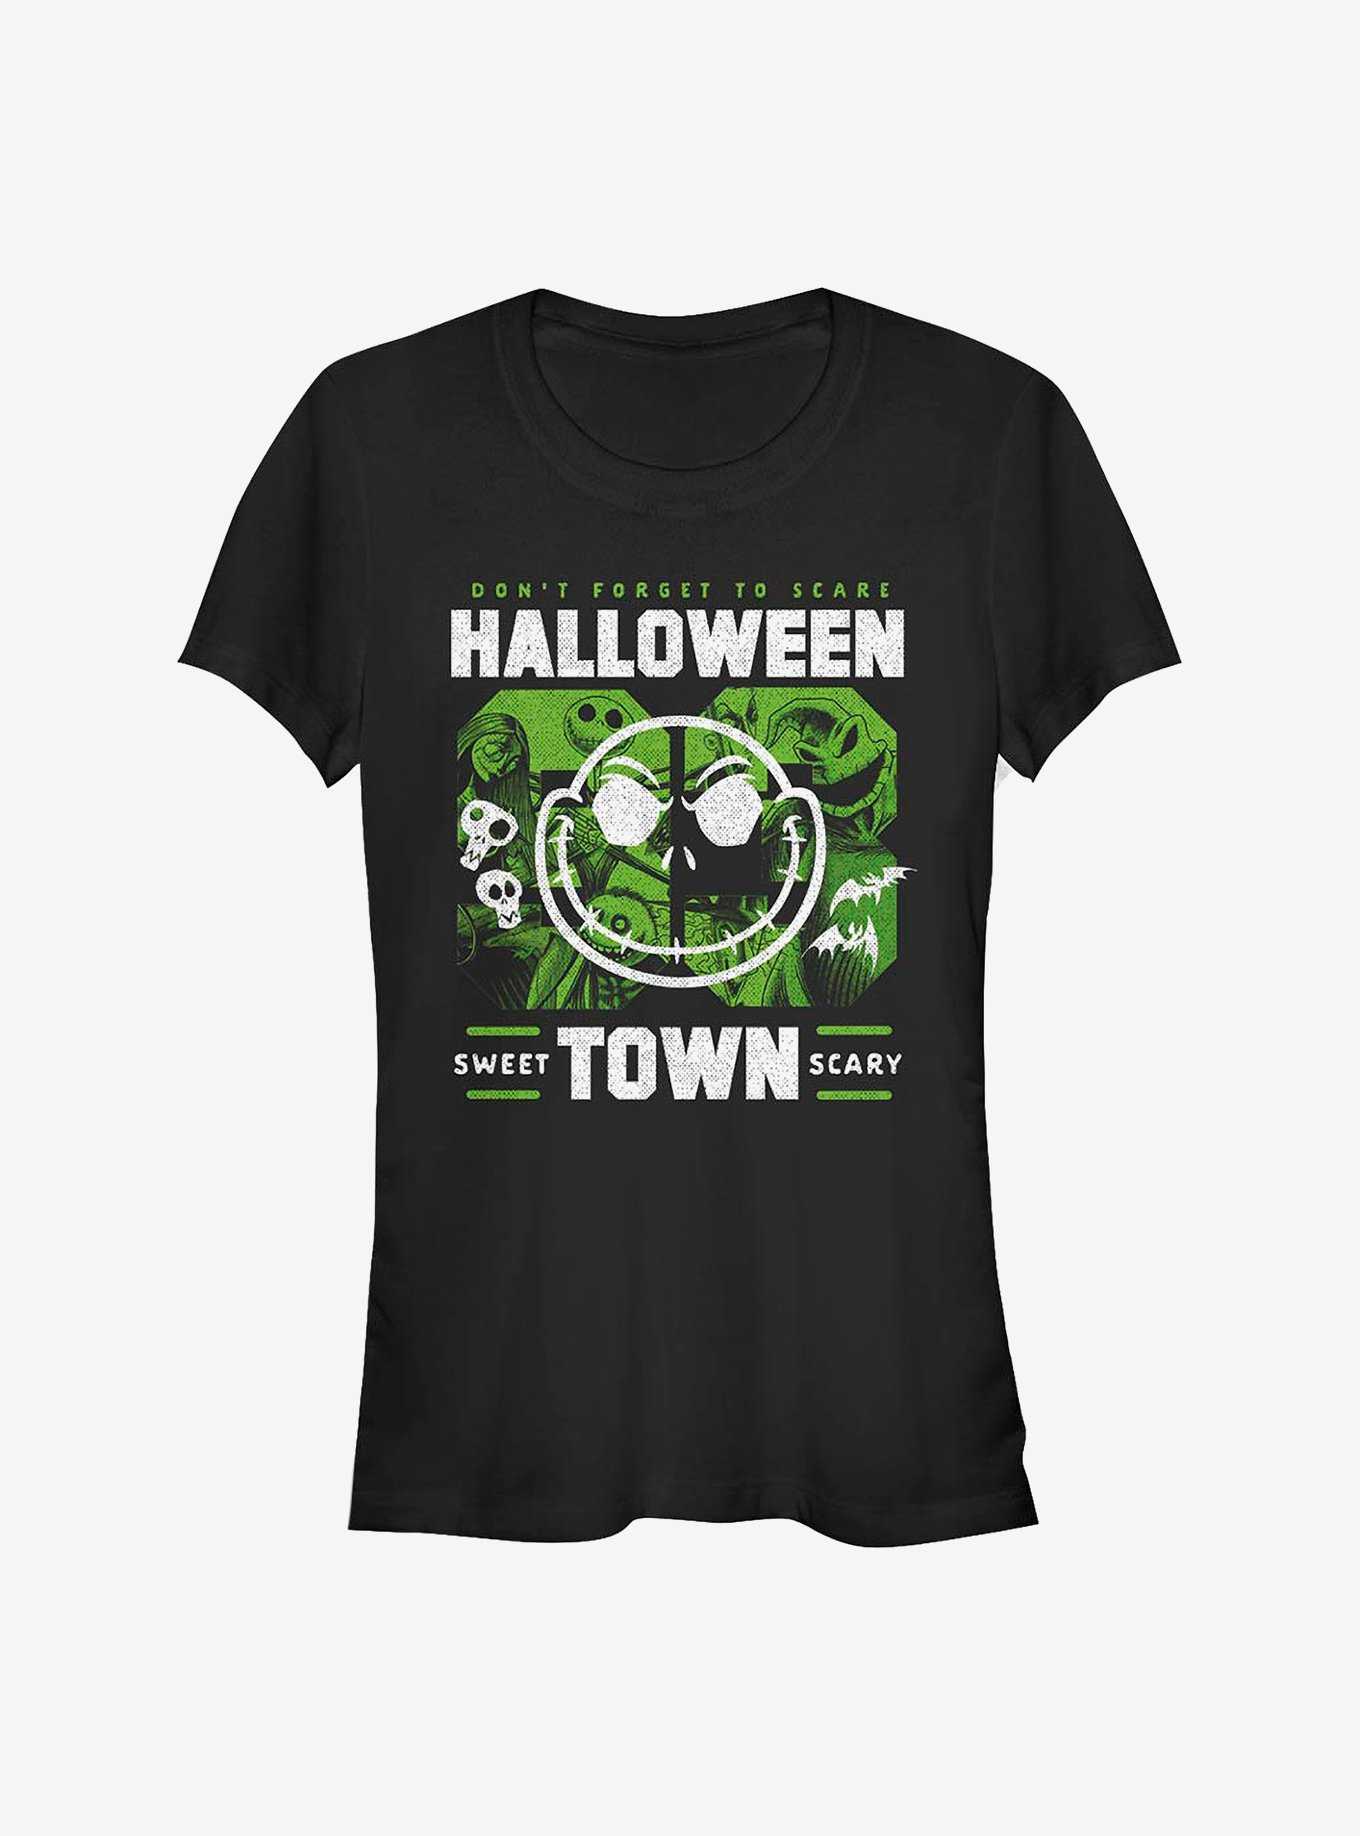 Disney The Nightmare Before Christmas Halloweentown Collage Girls T-Shirt, , hi-res